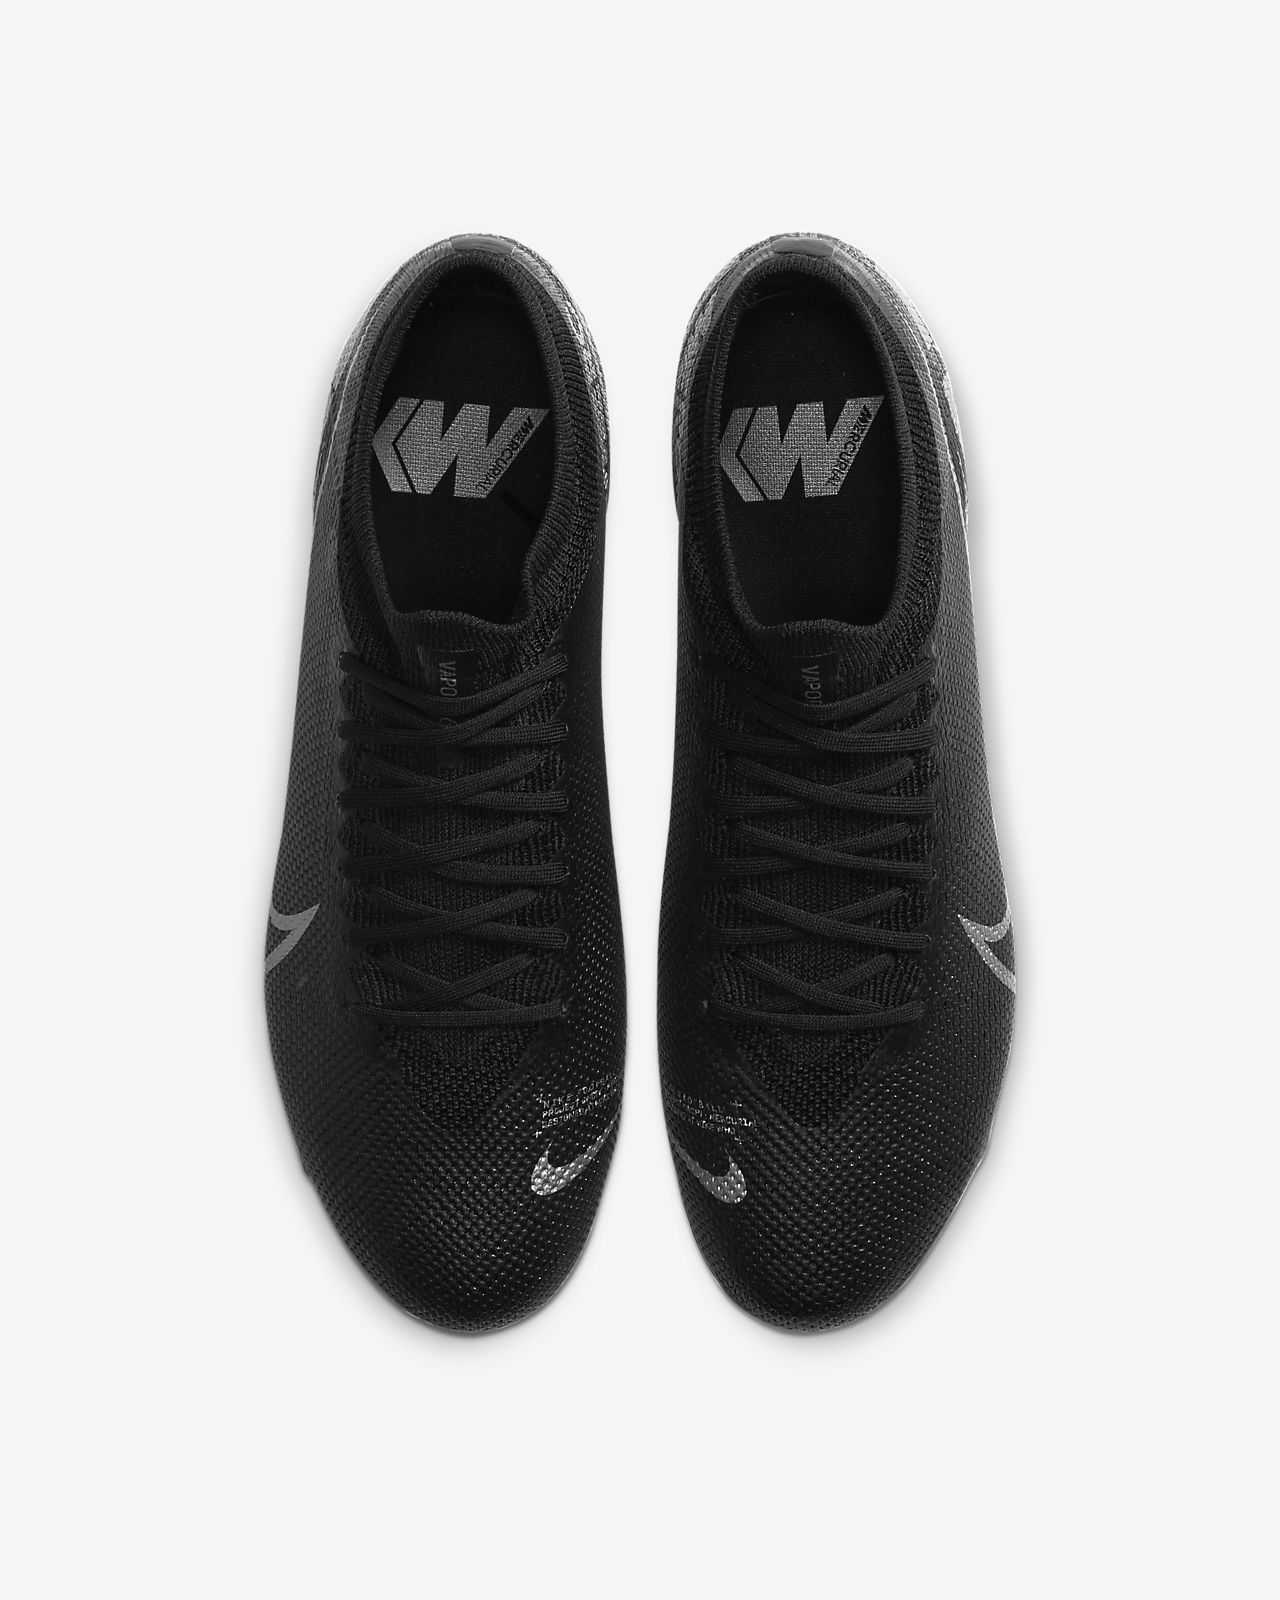 Nike Mercurial Vapor XIII Pro FG Black Black Mens Boots